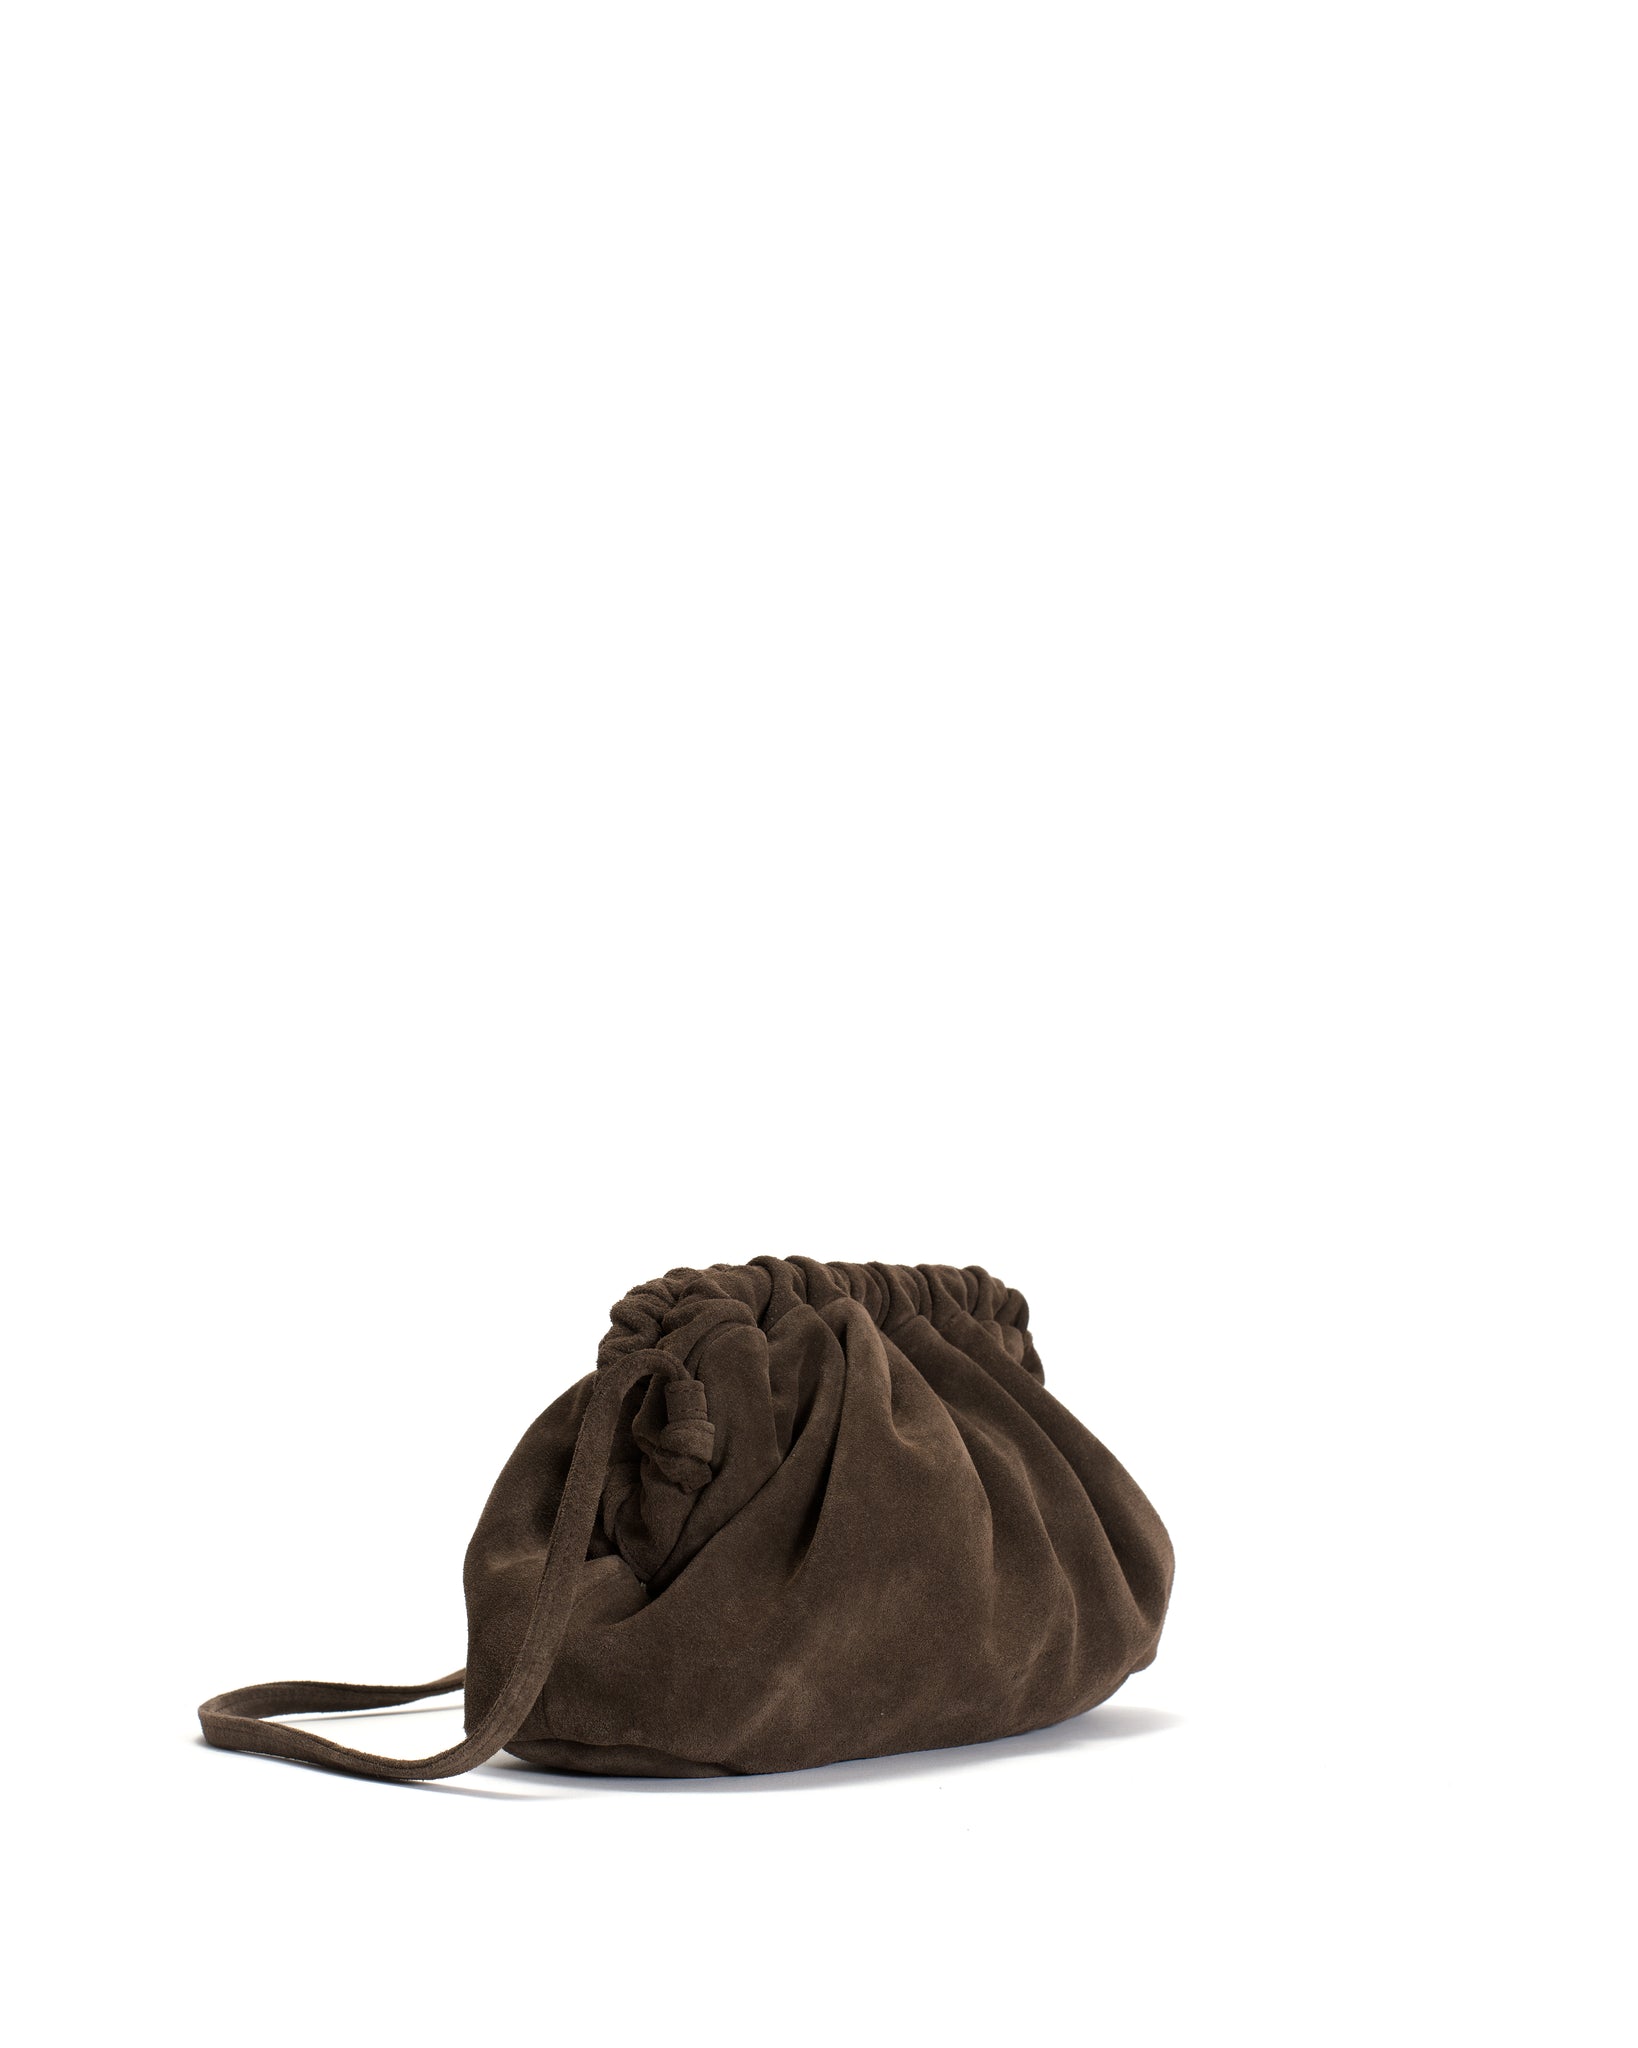 Hally petite cloud bag Calf suede Coffee brown - Anonymous Copenhagen